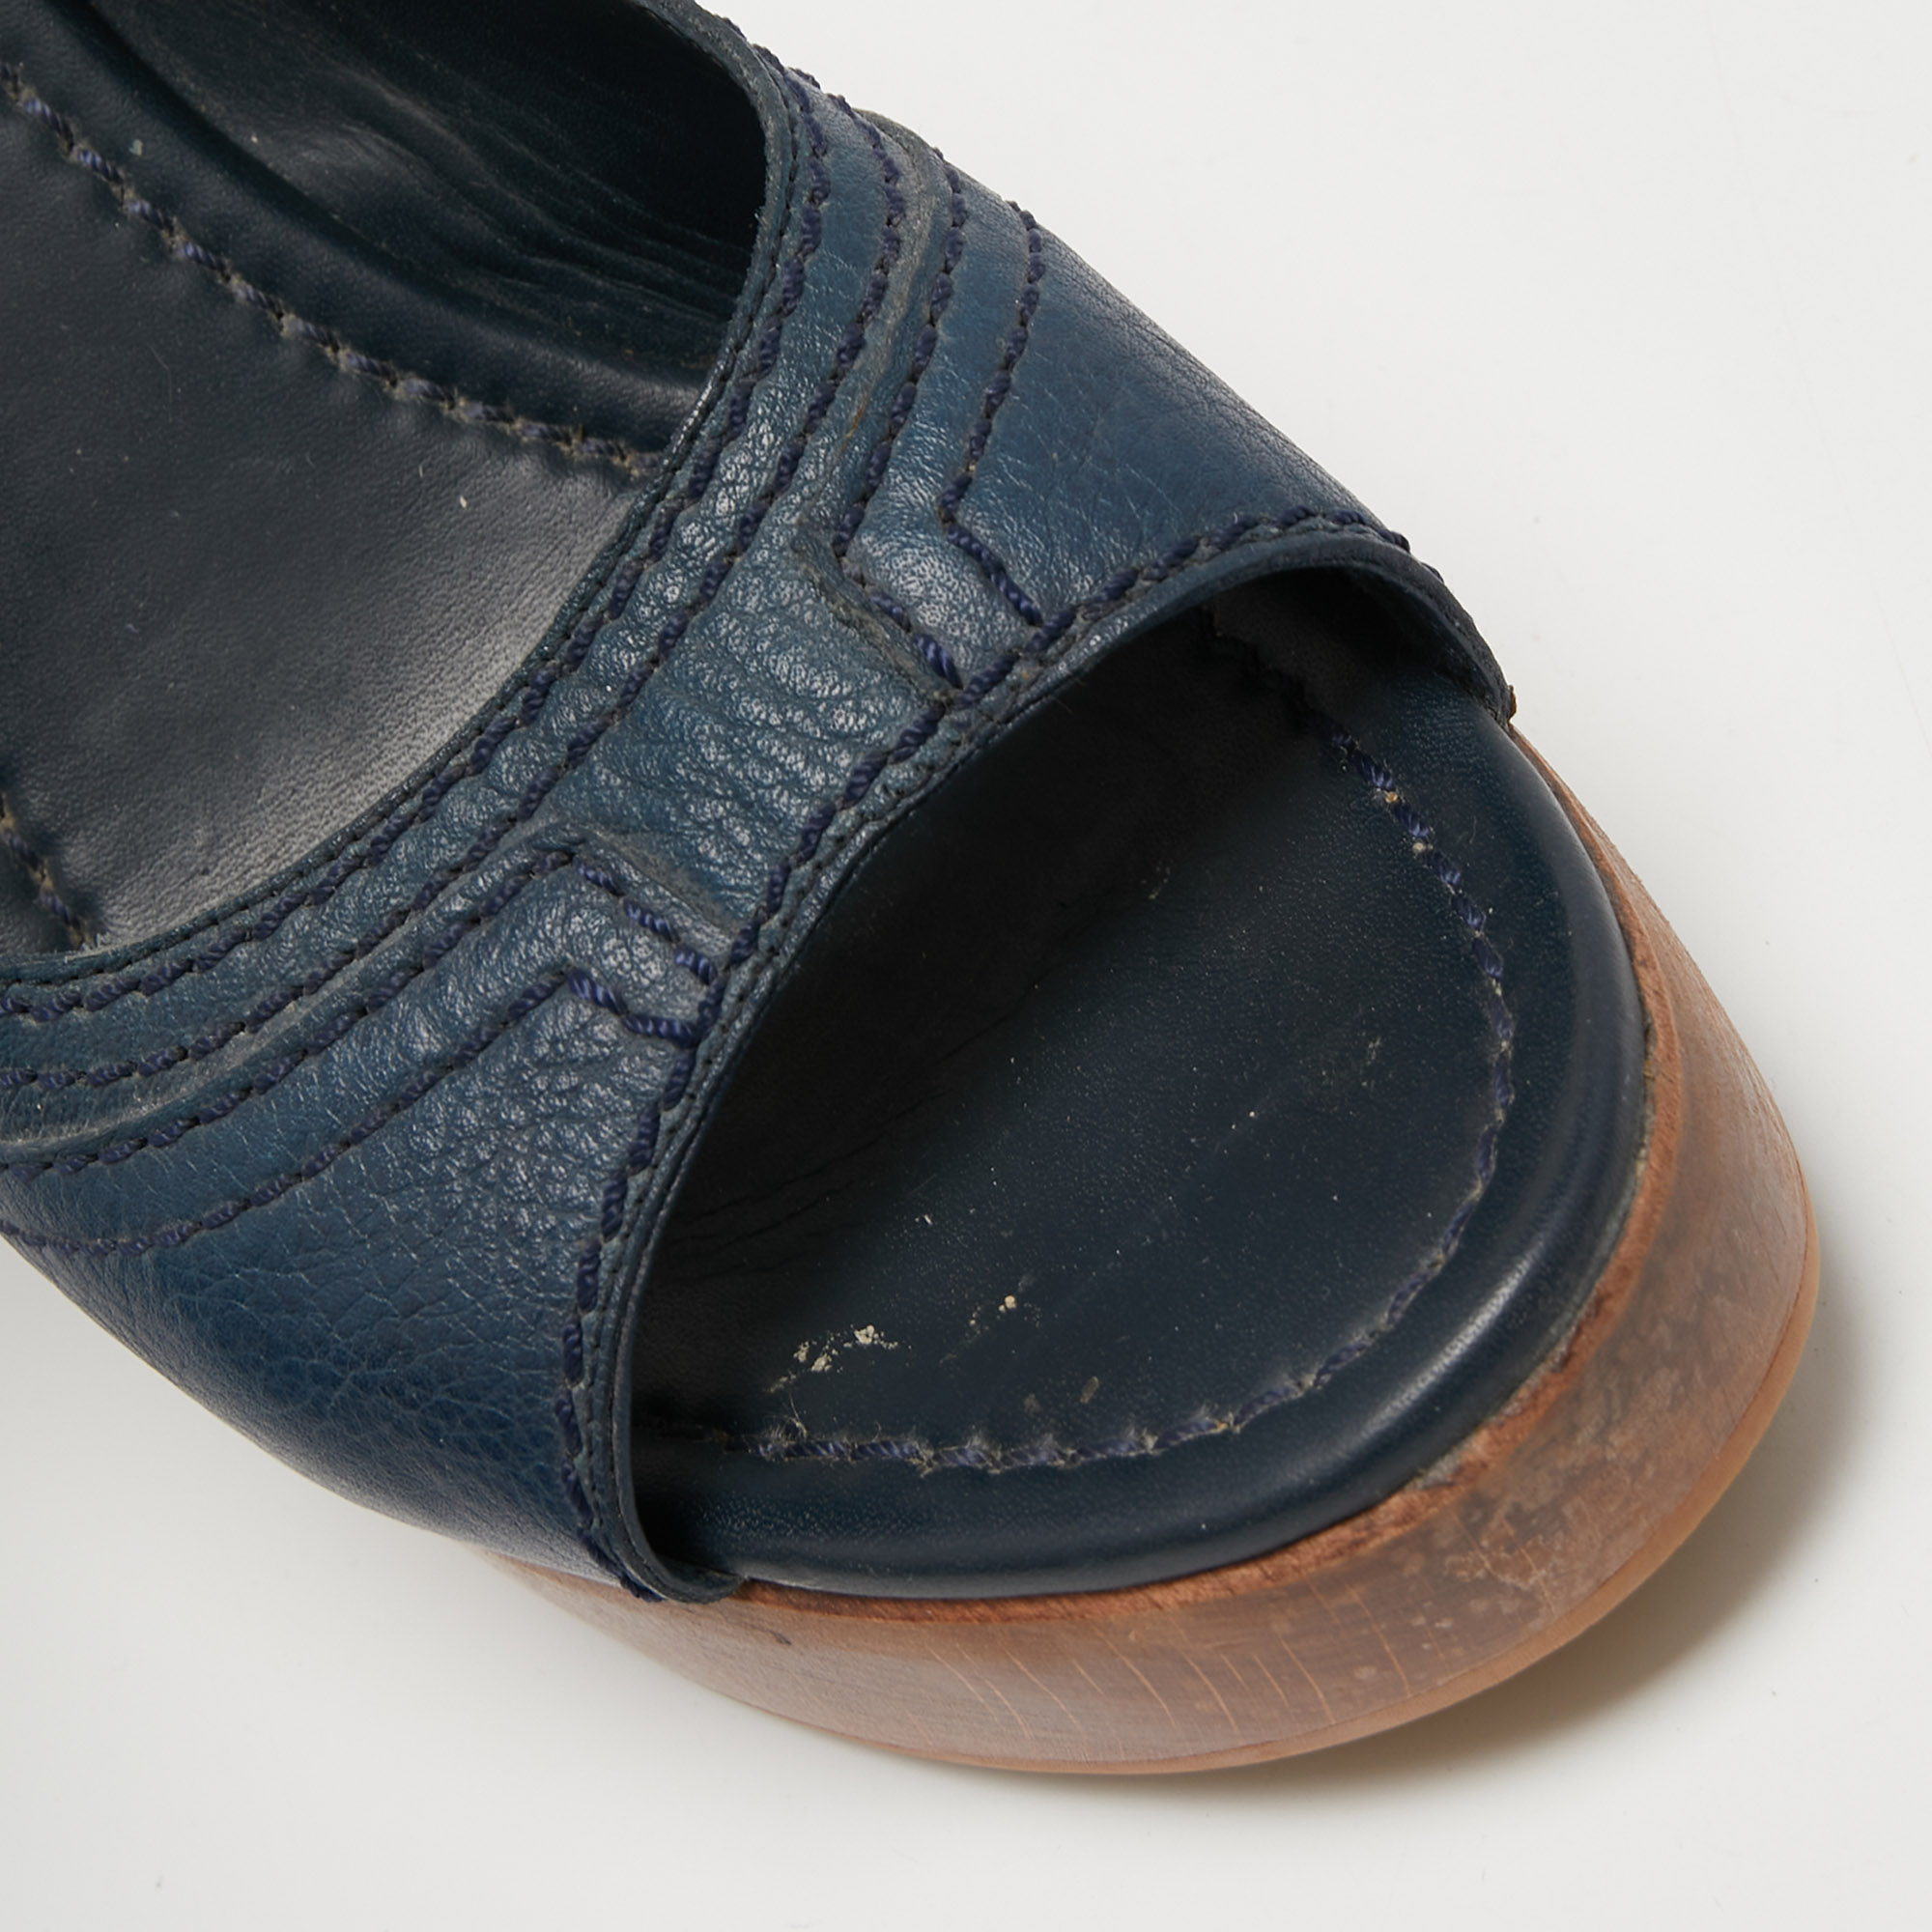 Yves Saint Laurent Blue Leather Slingback Sandals Size 38.5